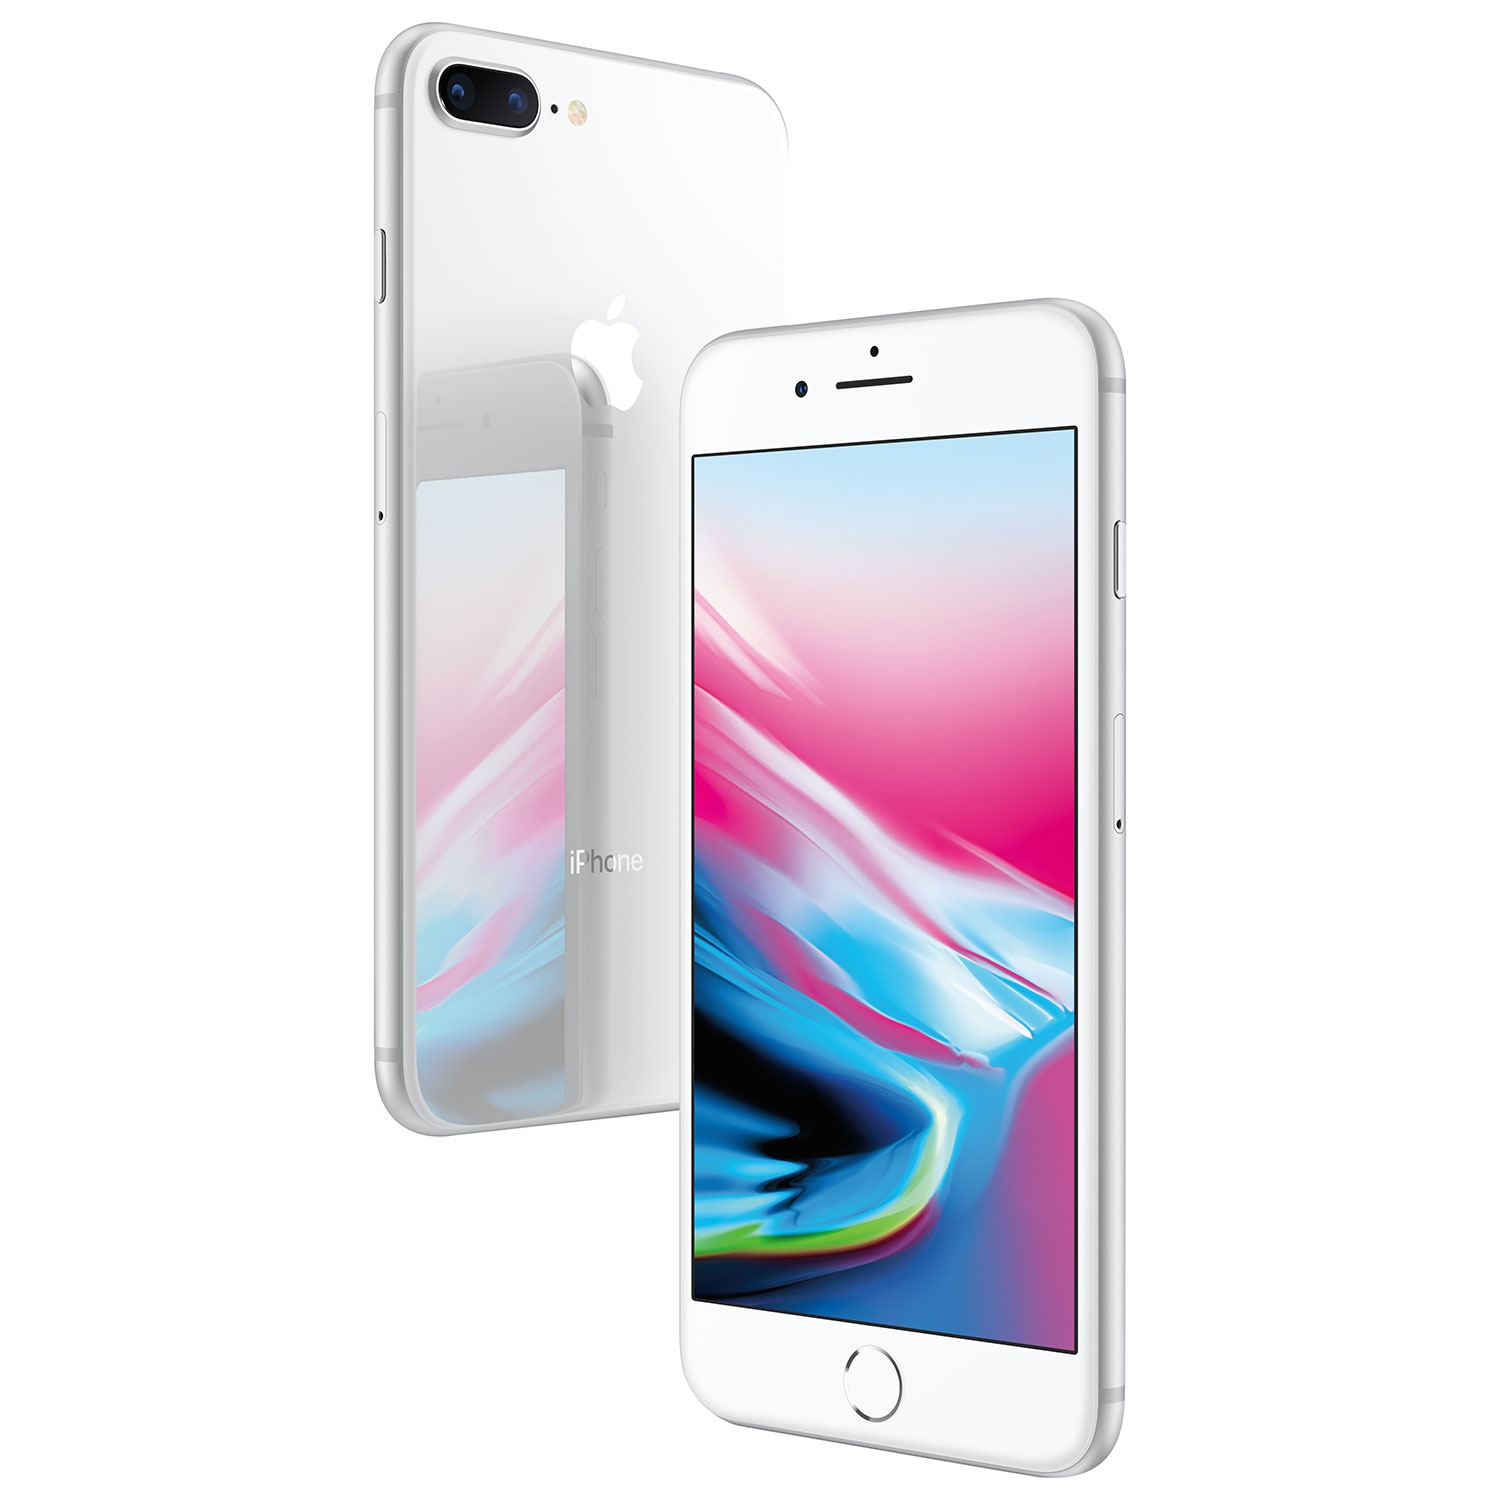 Refurbished (Good) - Apple iPhone 8 Plus 64GB Smartphone - Silver - Unlocked